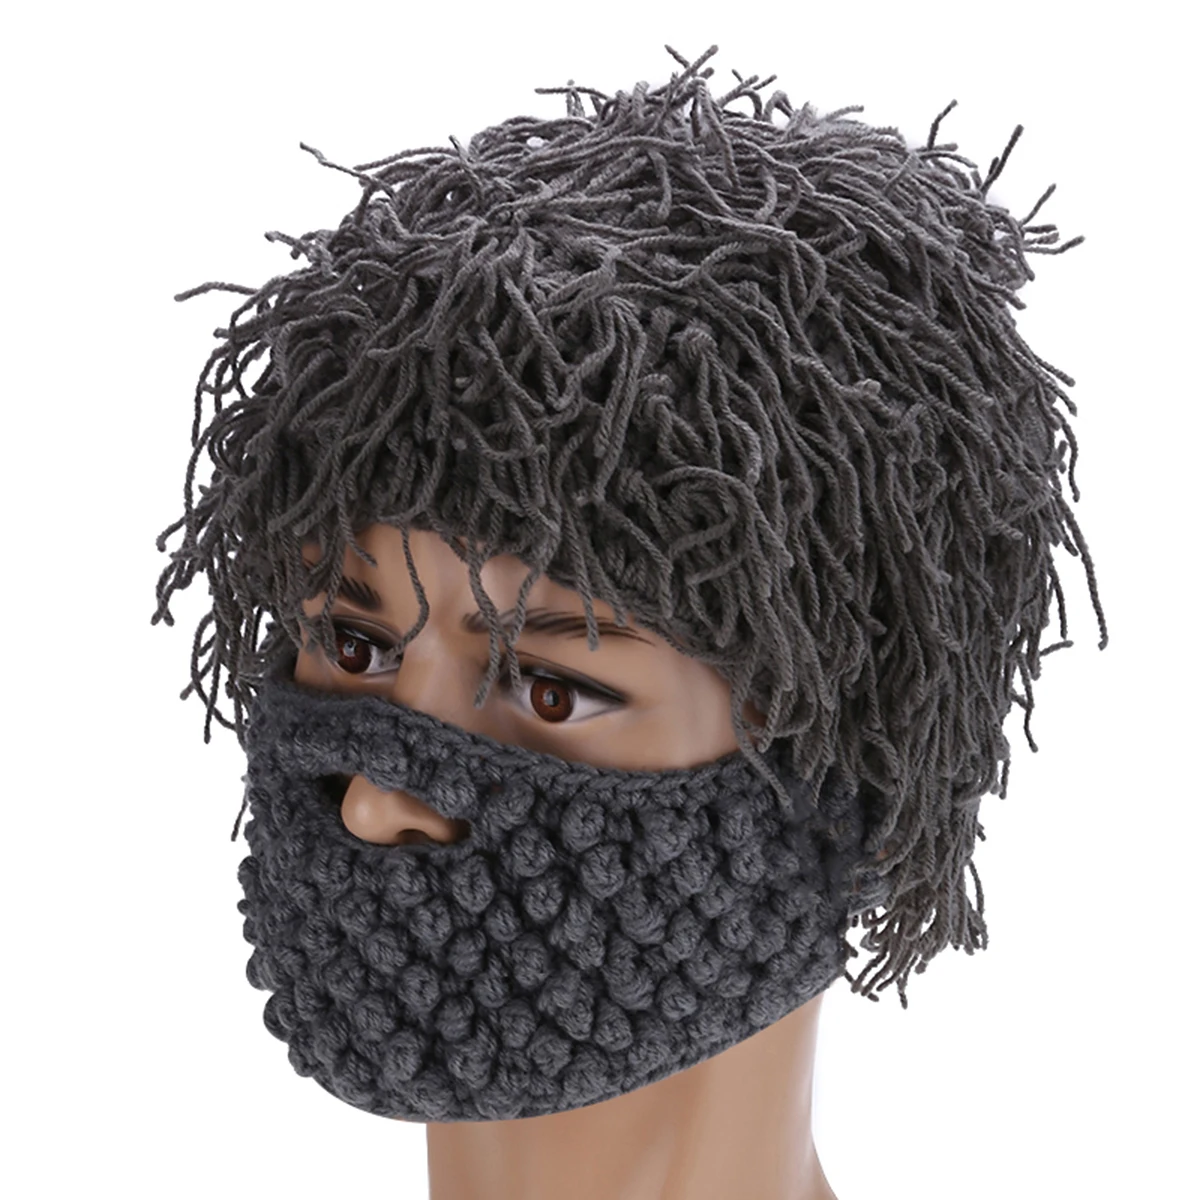 

New Warm Beard Hat Mustache Knit Crochet Beanie Cap Men Winter Warm Keep Cover Face Funny Hat Black / Gray